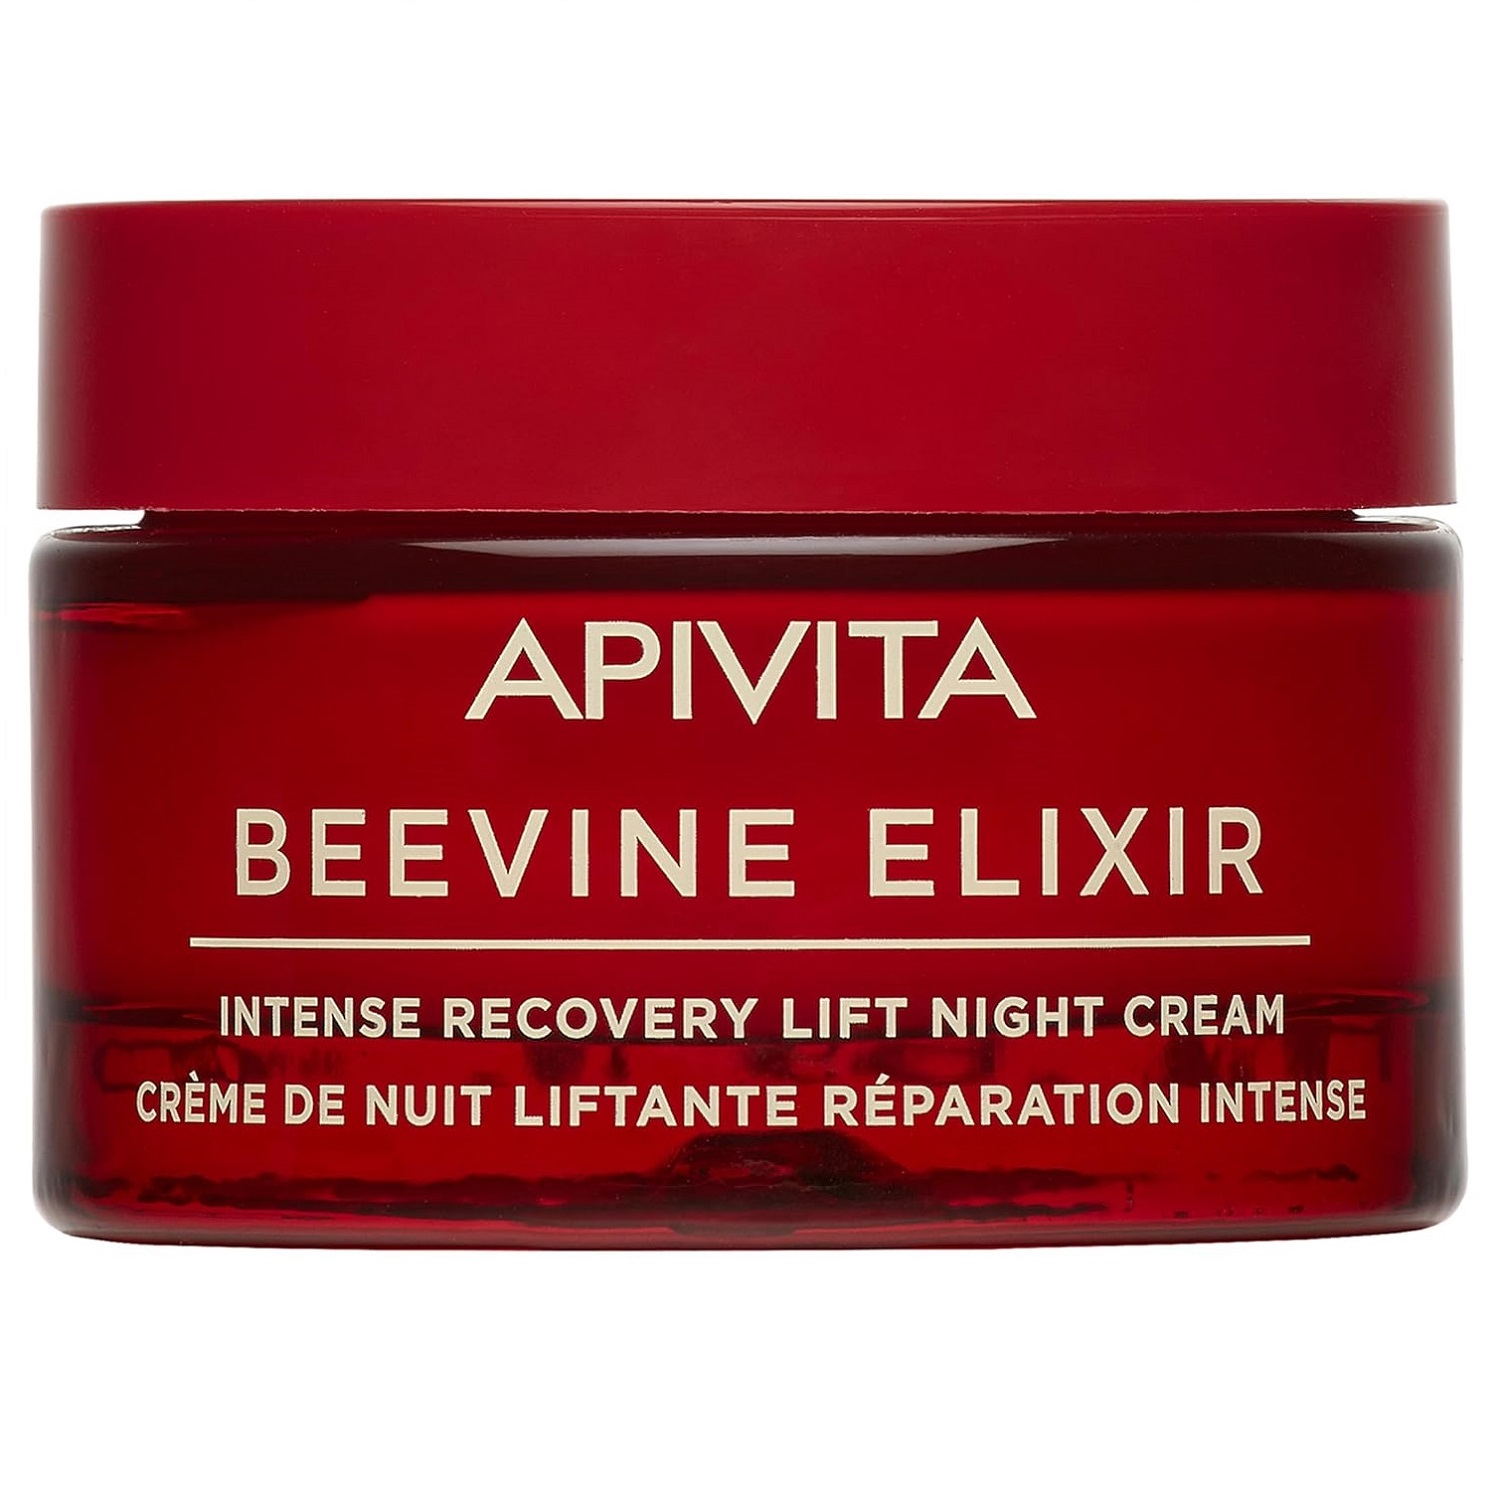 Apivita Интенсивный восстанавливающий ночной крем-лифтинг Intense Recovery Lift Night Cream, 50 мл (Apivita, Beevine Elixir)